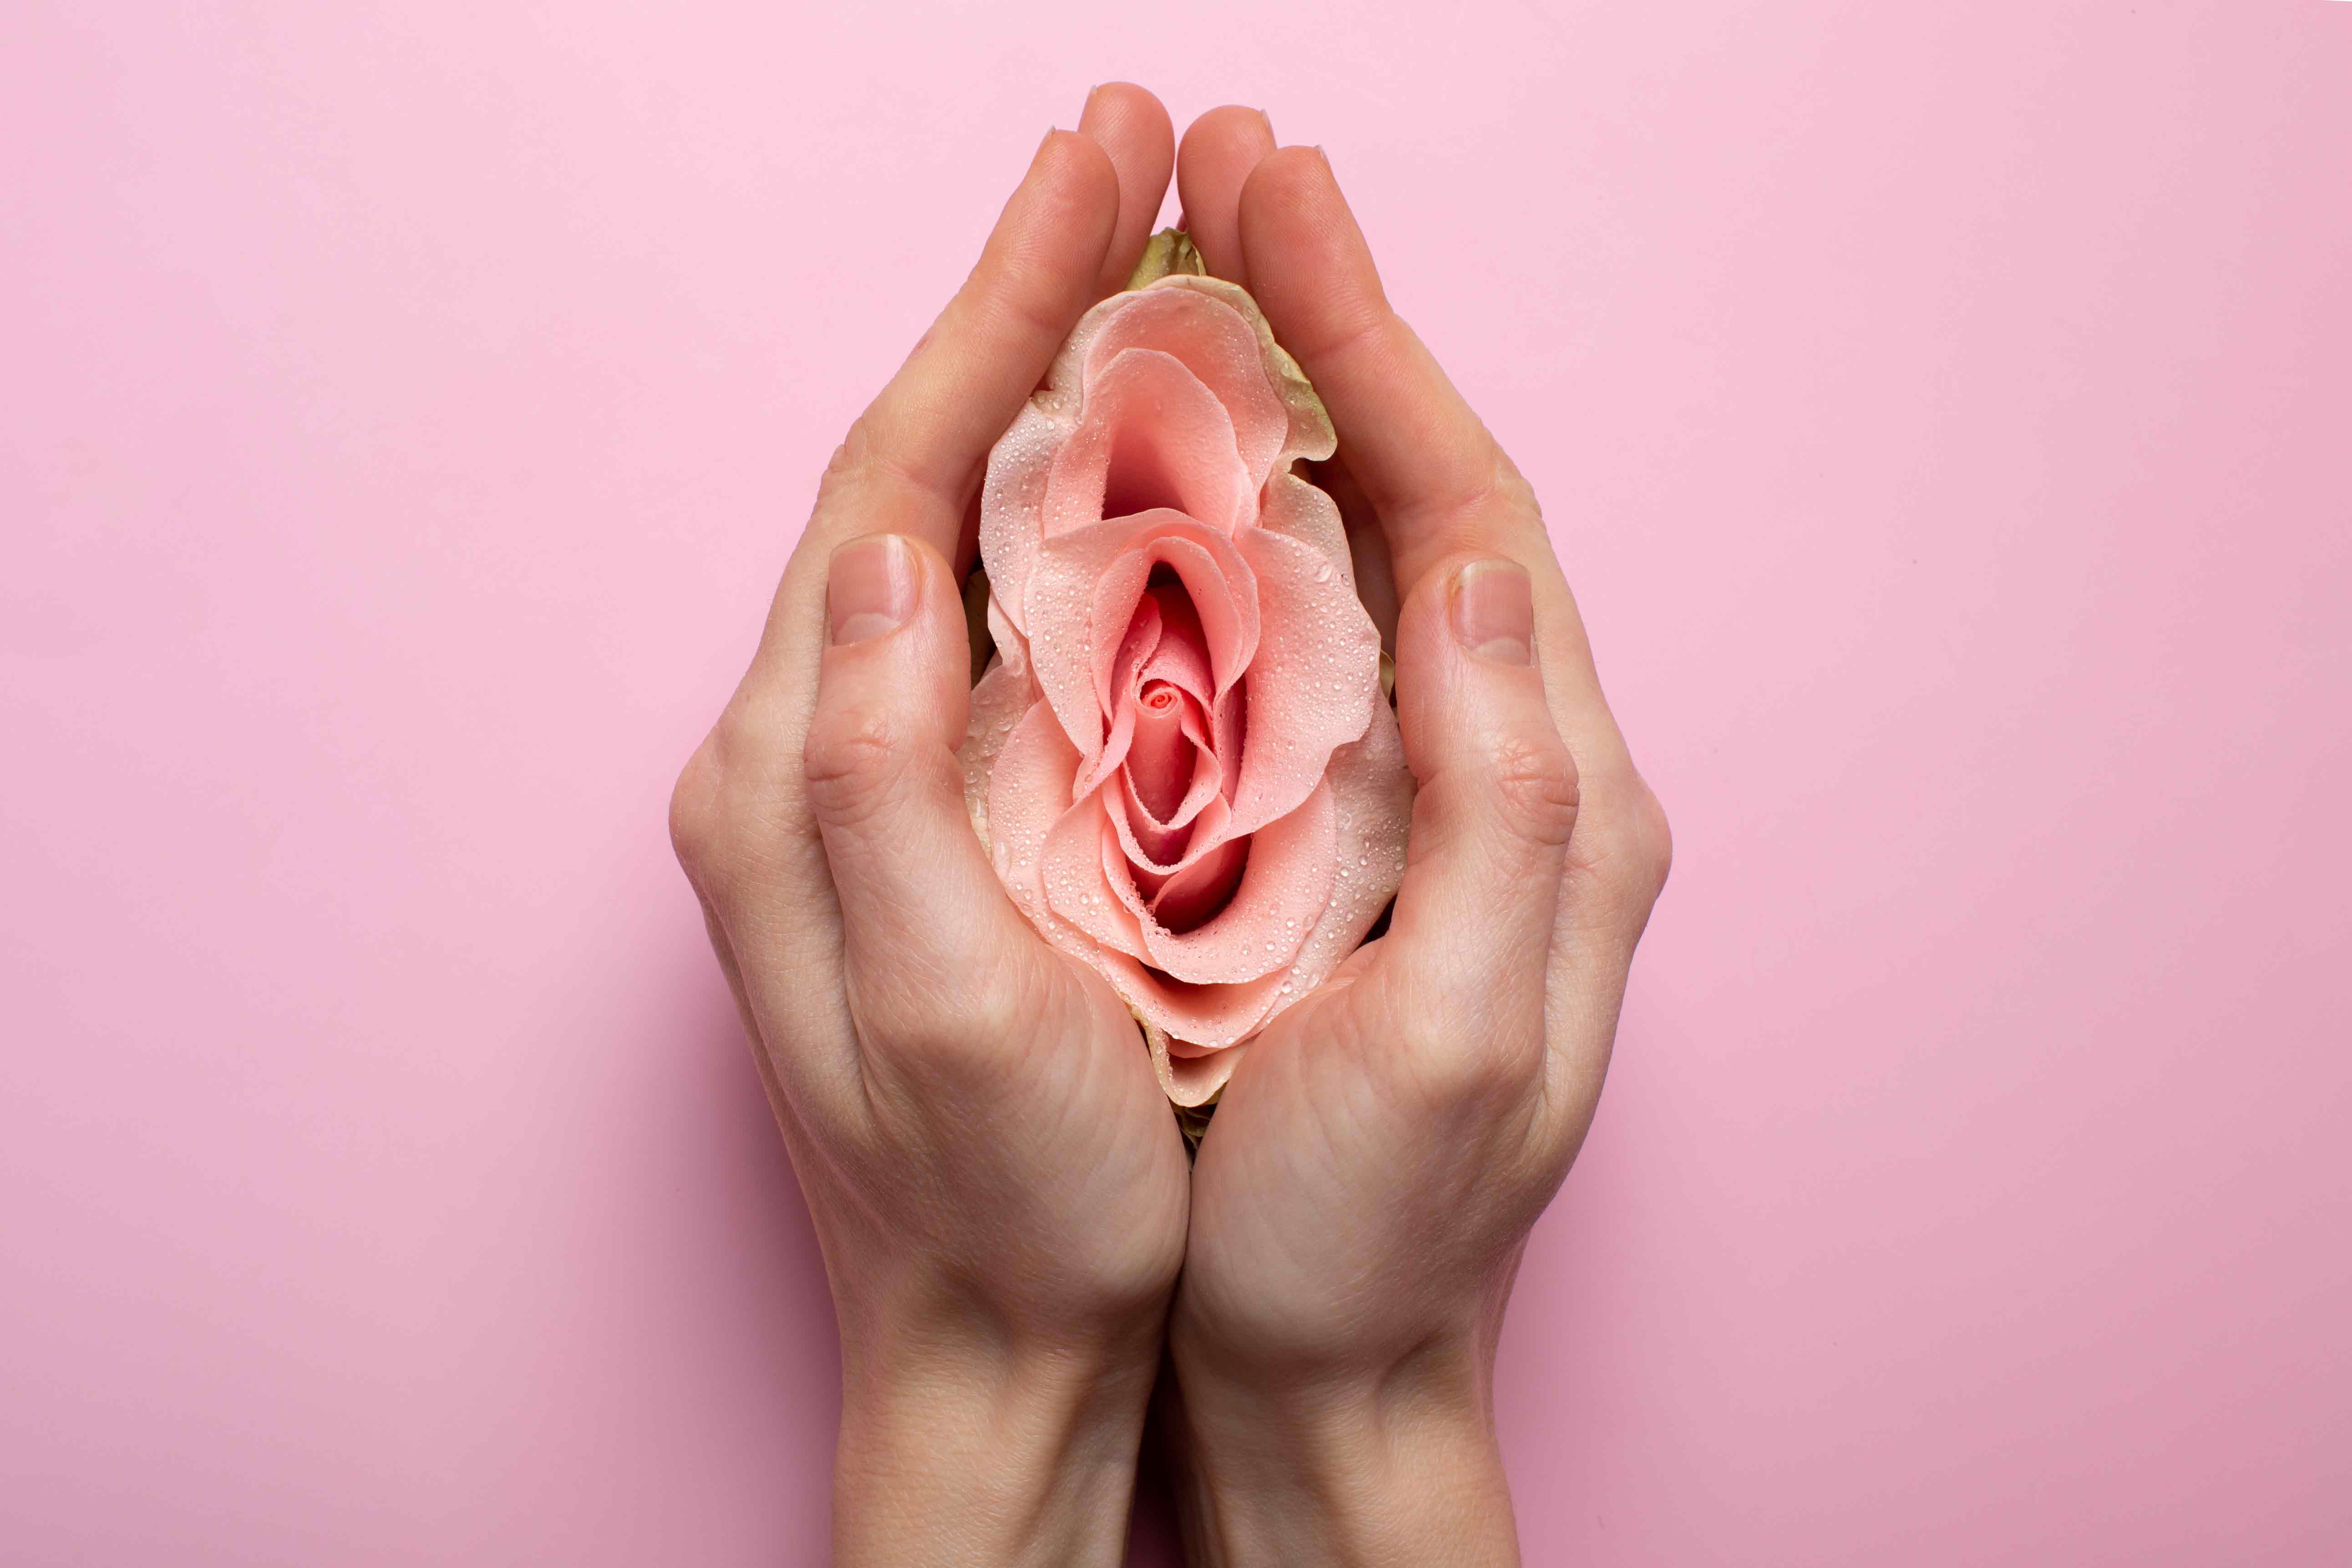 woman-holding-rose-hands-reproductive-system-visualizationbaja.jpg